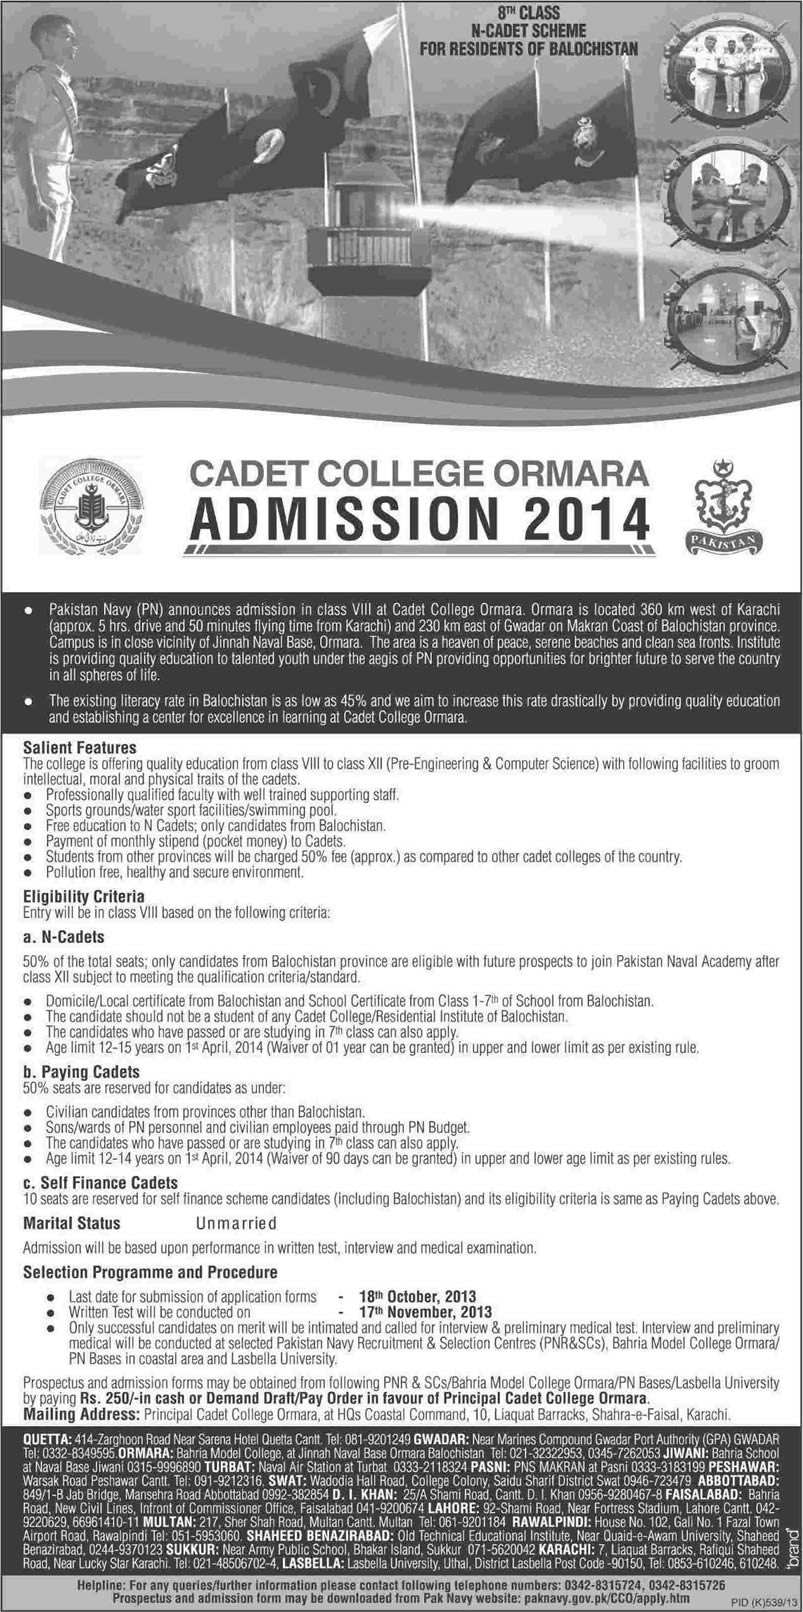 Cadet College Ormara Admission 2014 / 2013 Application Form Download